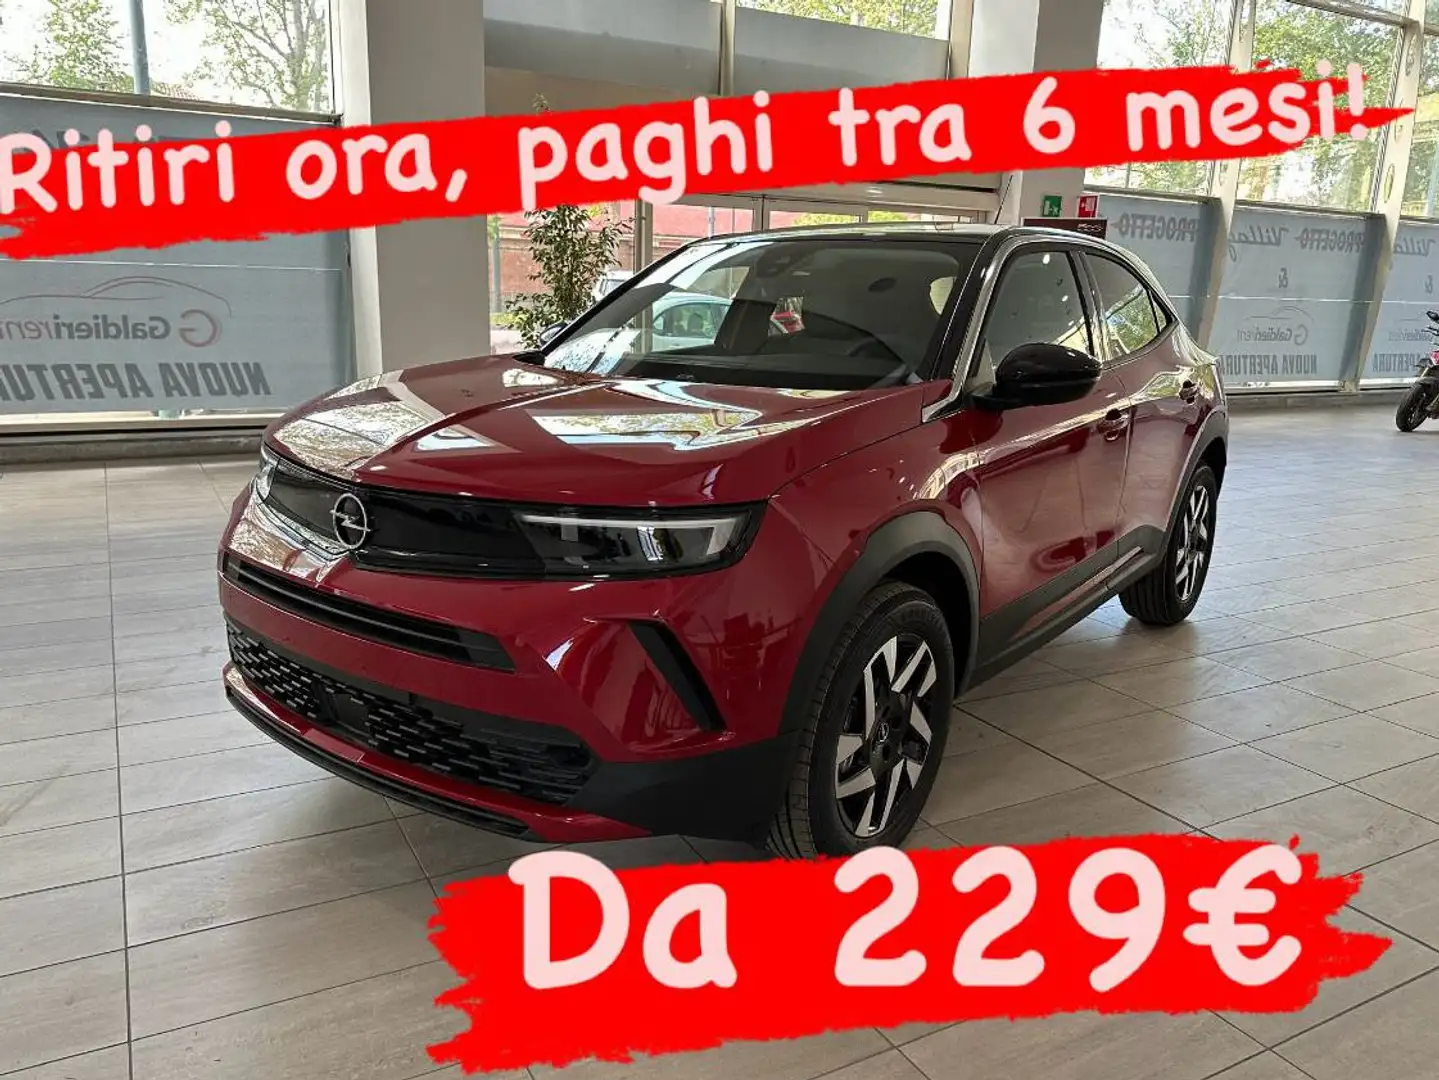 Opel Mokka DA 229€ TRA 6 MESI! Rood - 1